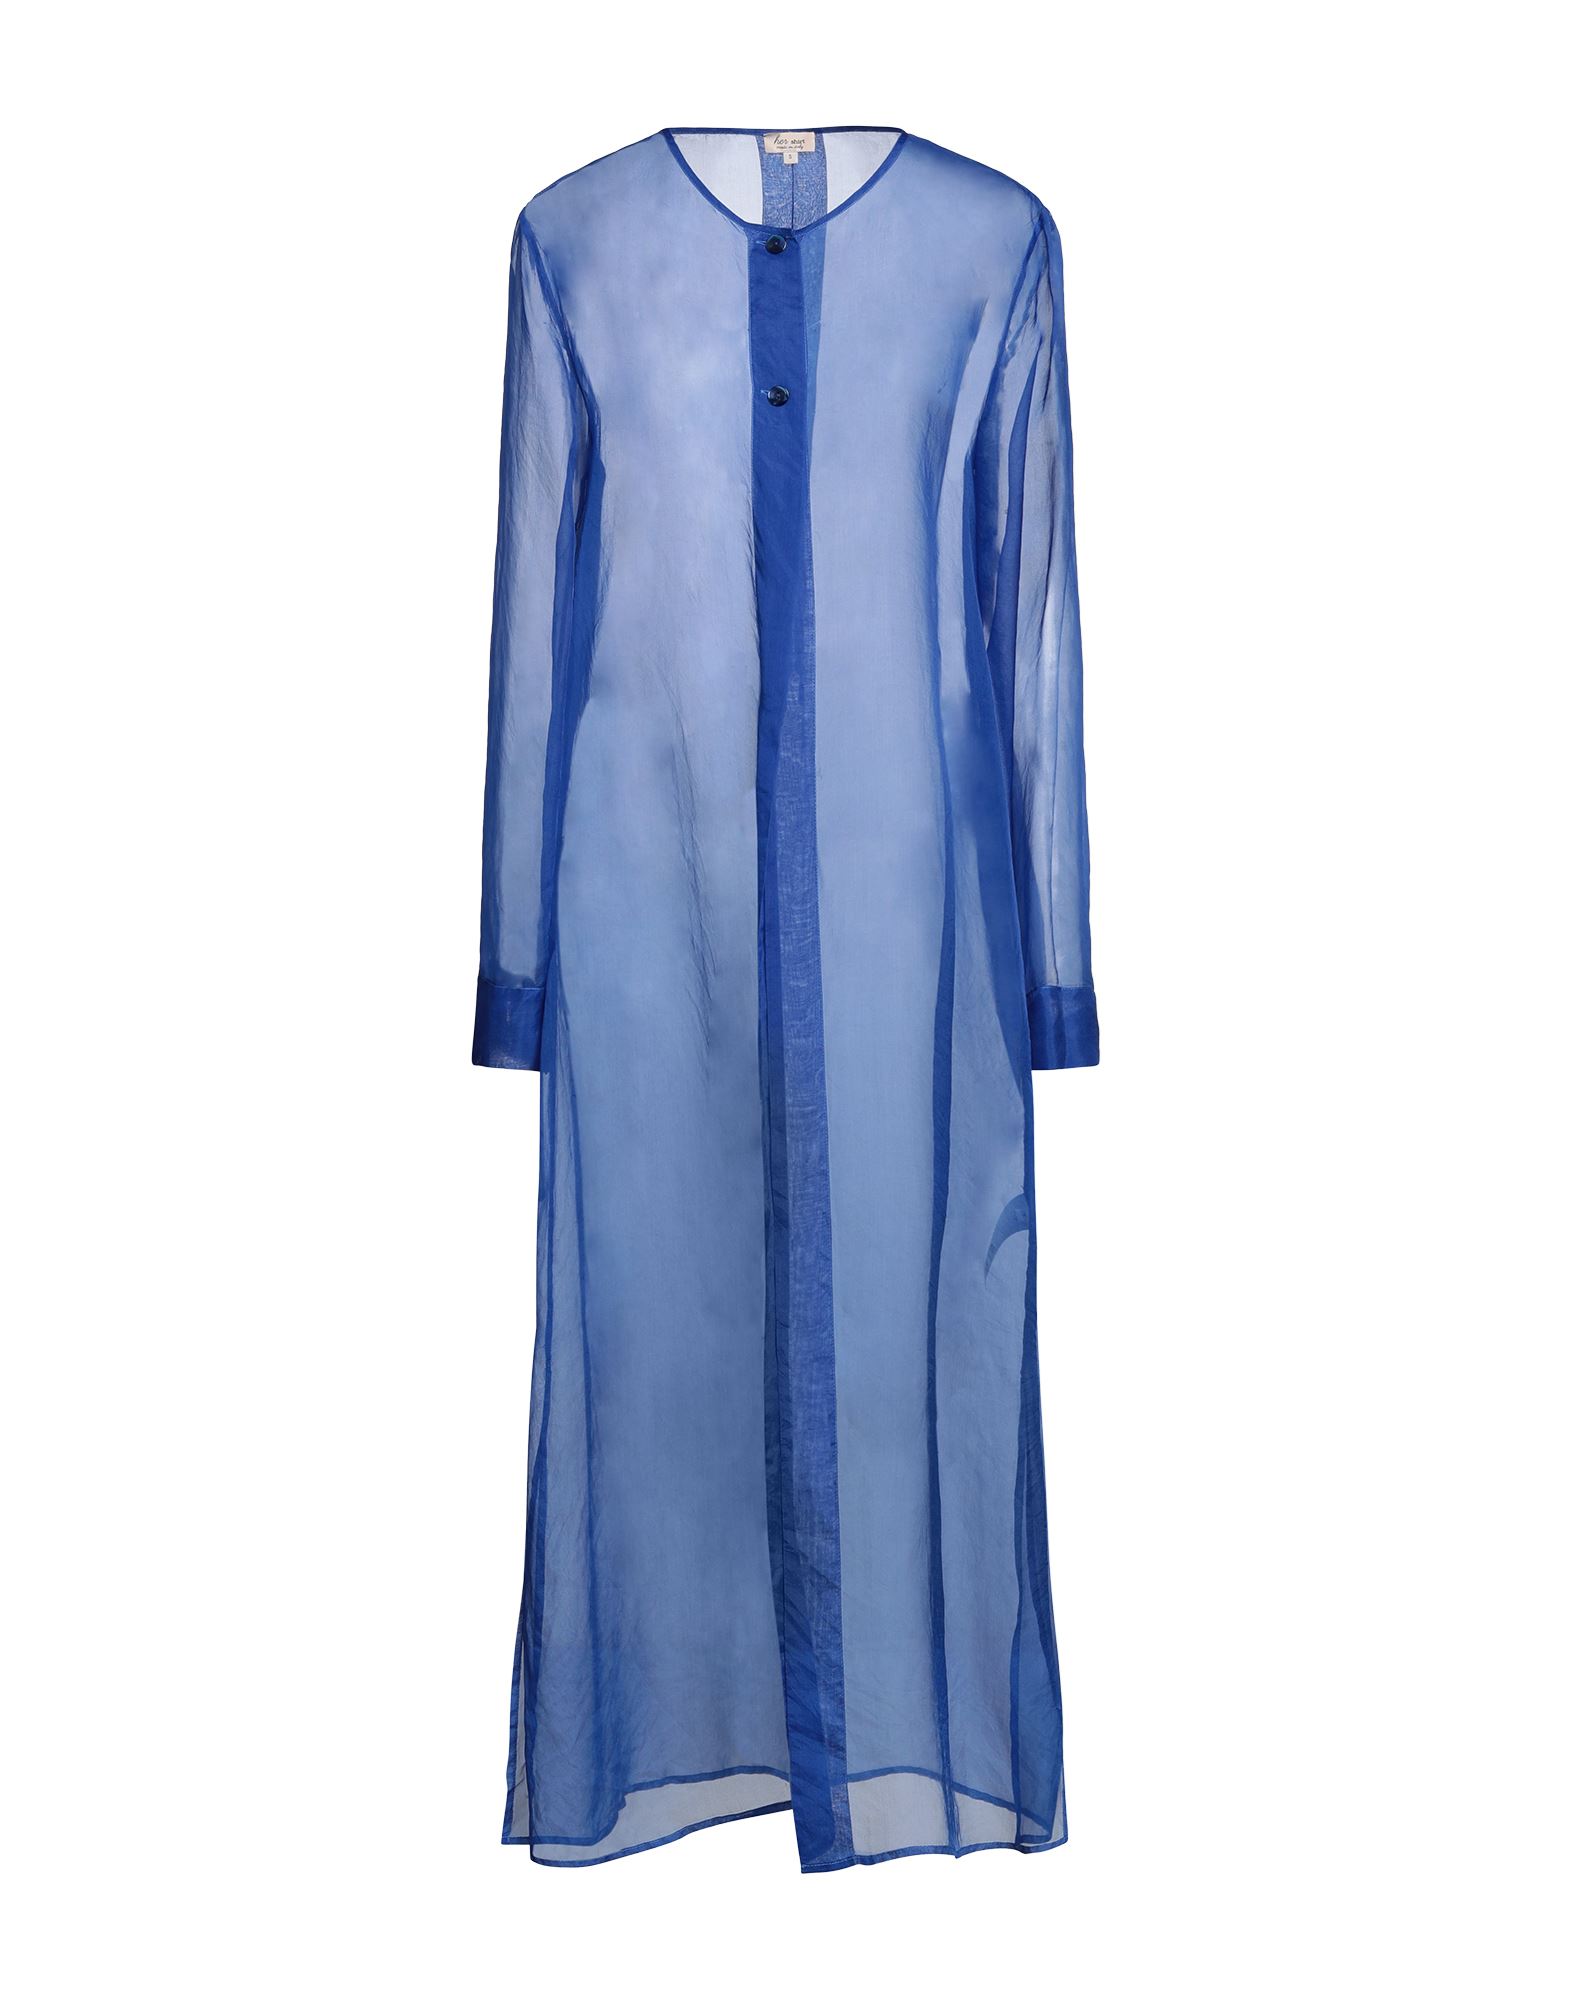 Shop Her Shirt Her Dress Woman Overcoat Bright Blue Size S Silk